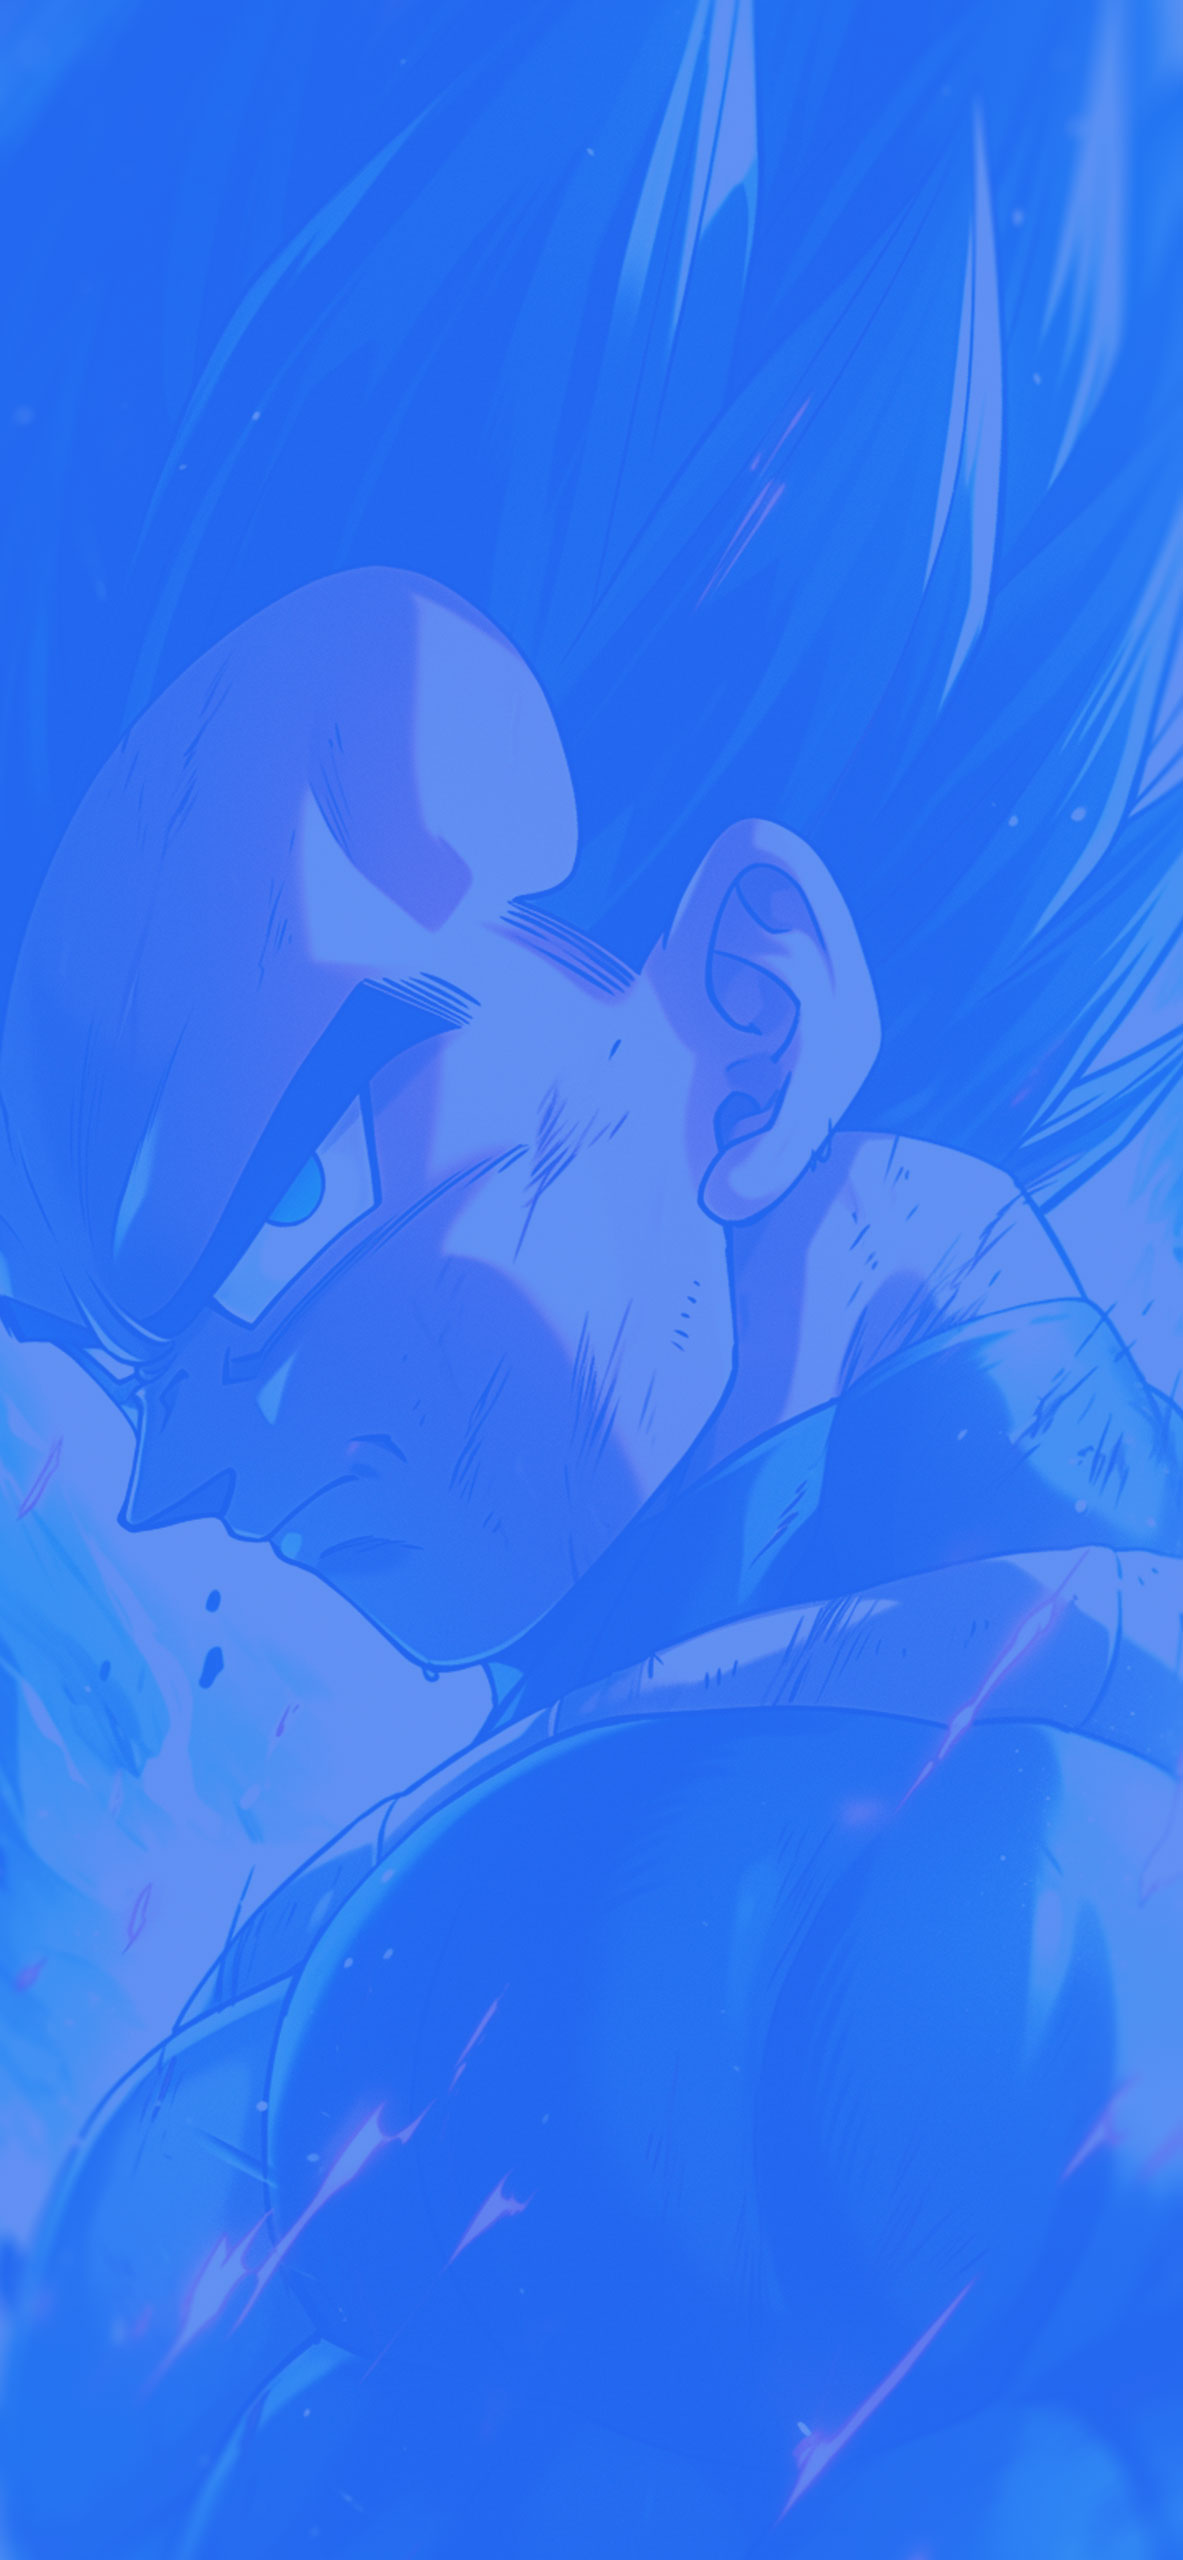 DBZ vegeta blue wallpaper Dragon ball Z anime wallpaper 4K